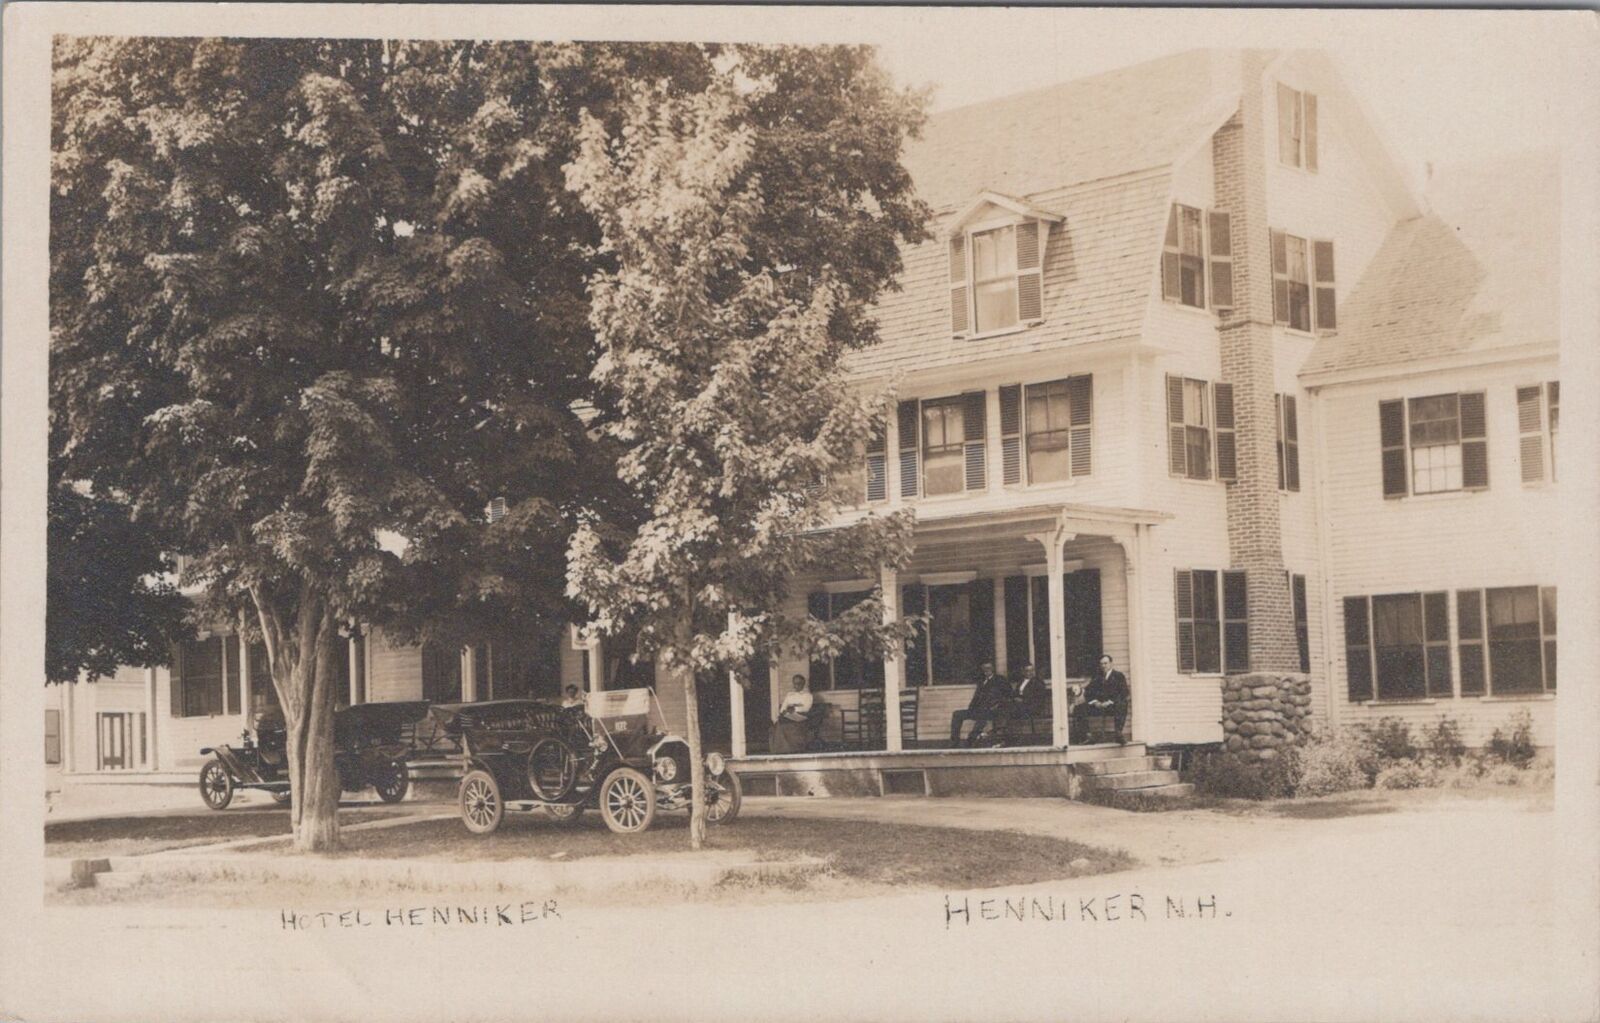 Hotel Henniker New Hampshire Old Cars c1910s RPPC Photo Postcard